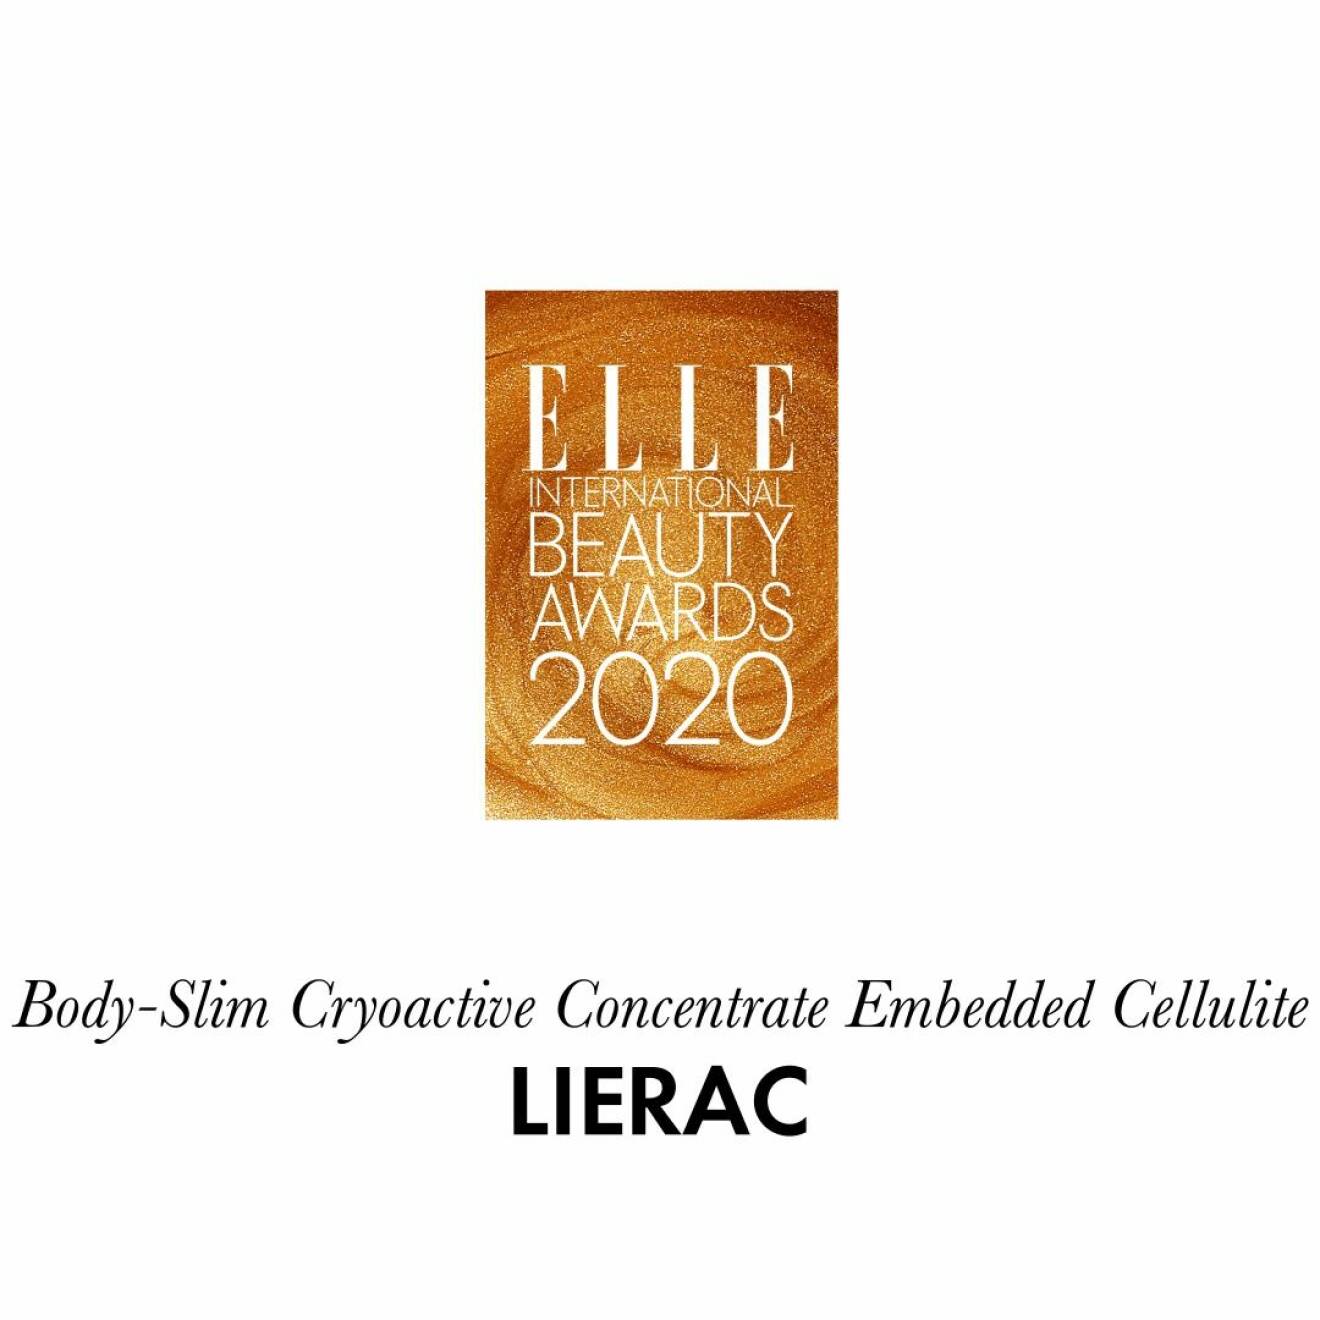 Årets cellulitprodukt Body-slim cryoactive concentrate embedded cellulite från Lierac.